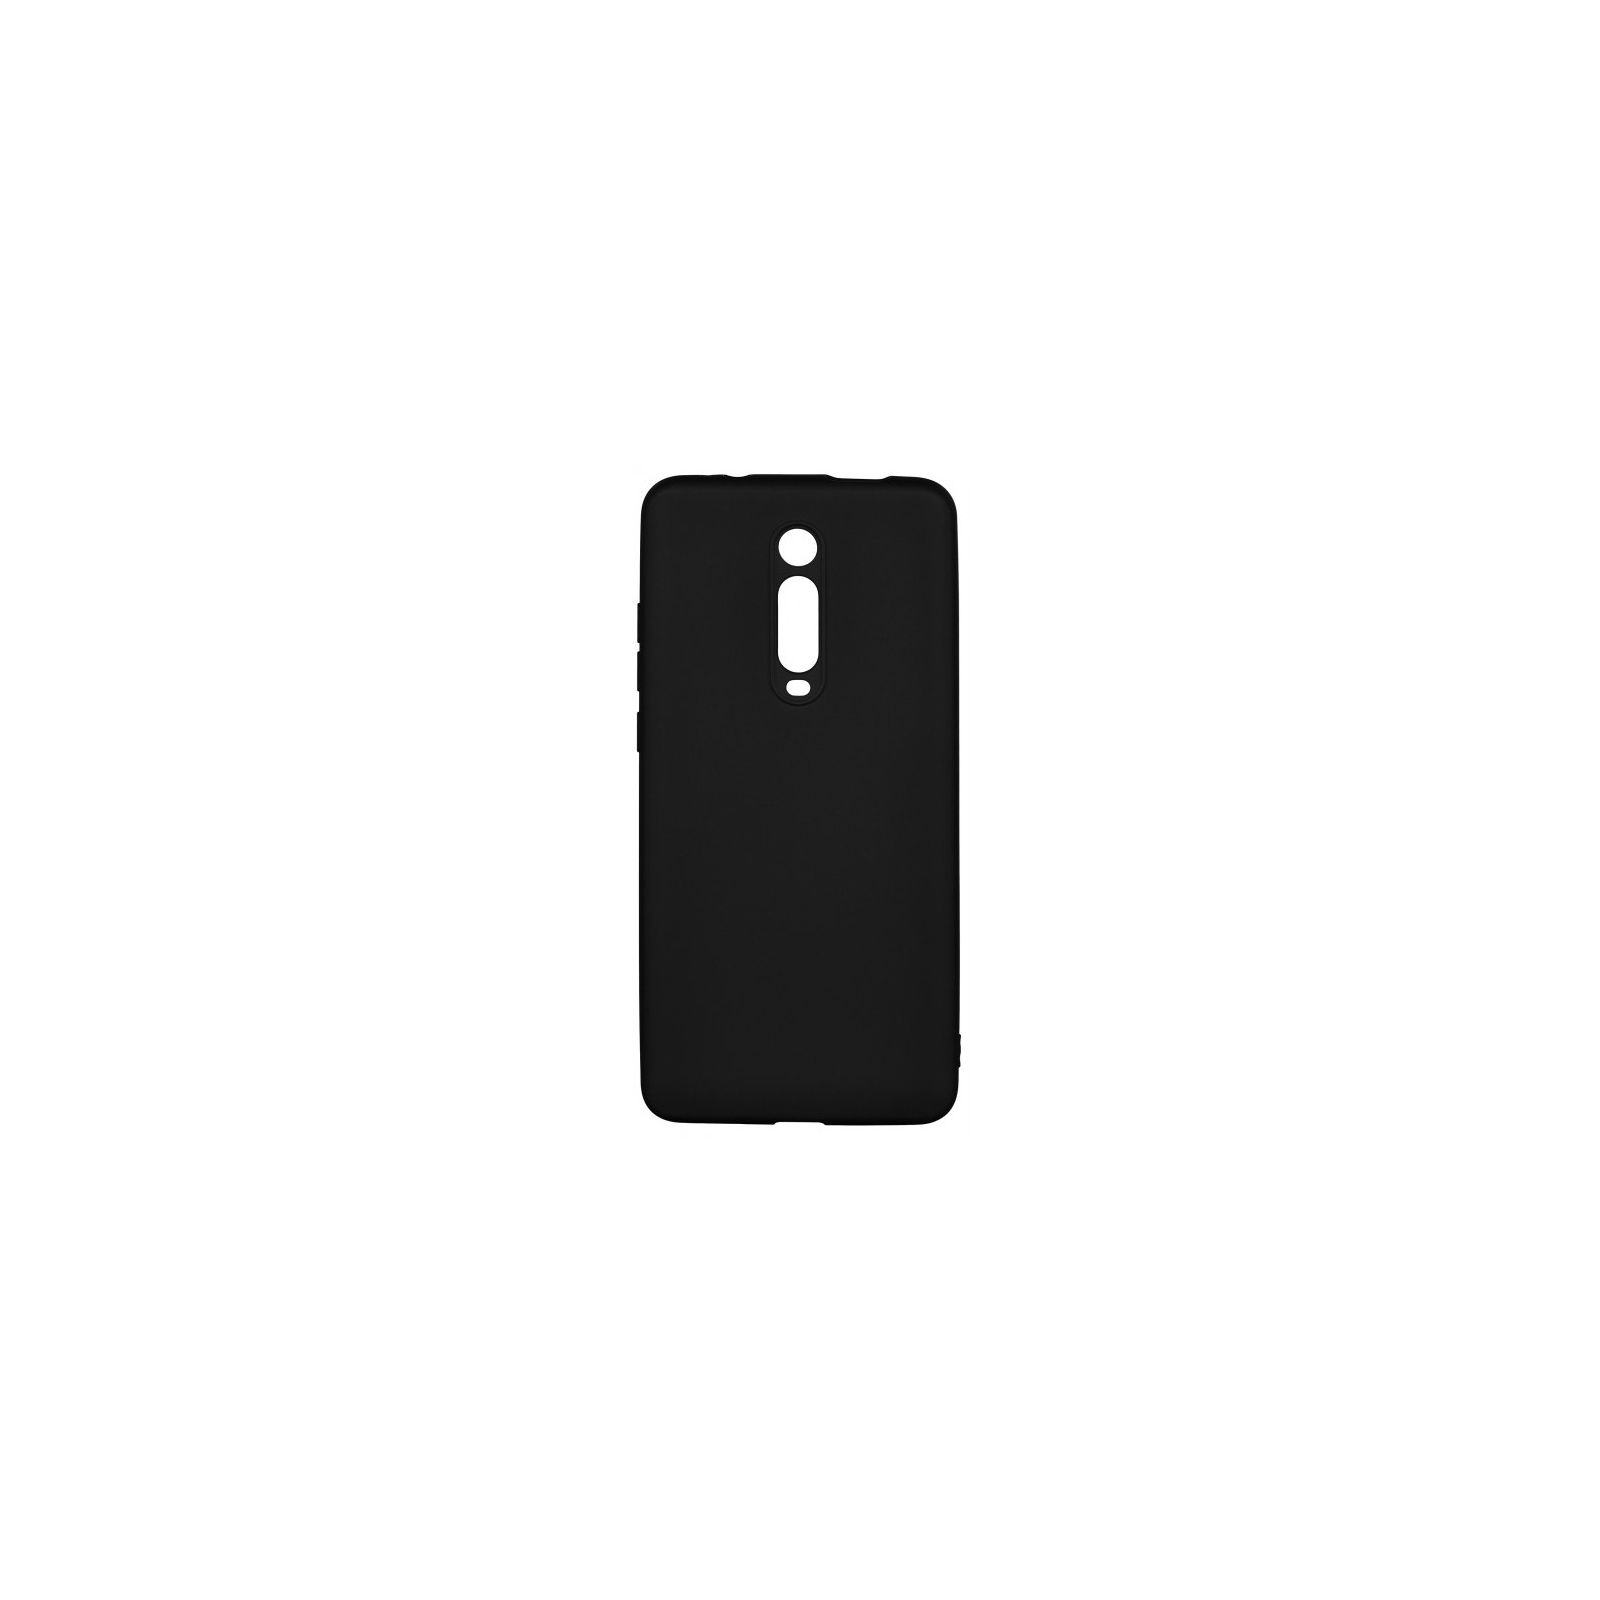 Чехол для мобильного телефона 2E Xiaomi Mi 9T/K20/K20 Pro, Soft feeling, Black (2E-MI-9T-NKSF-BK)